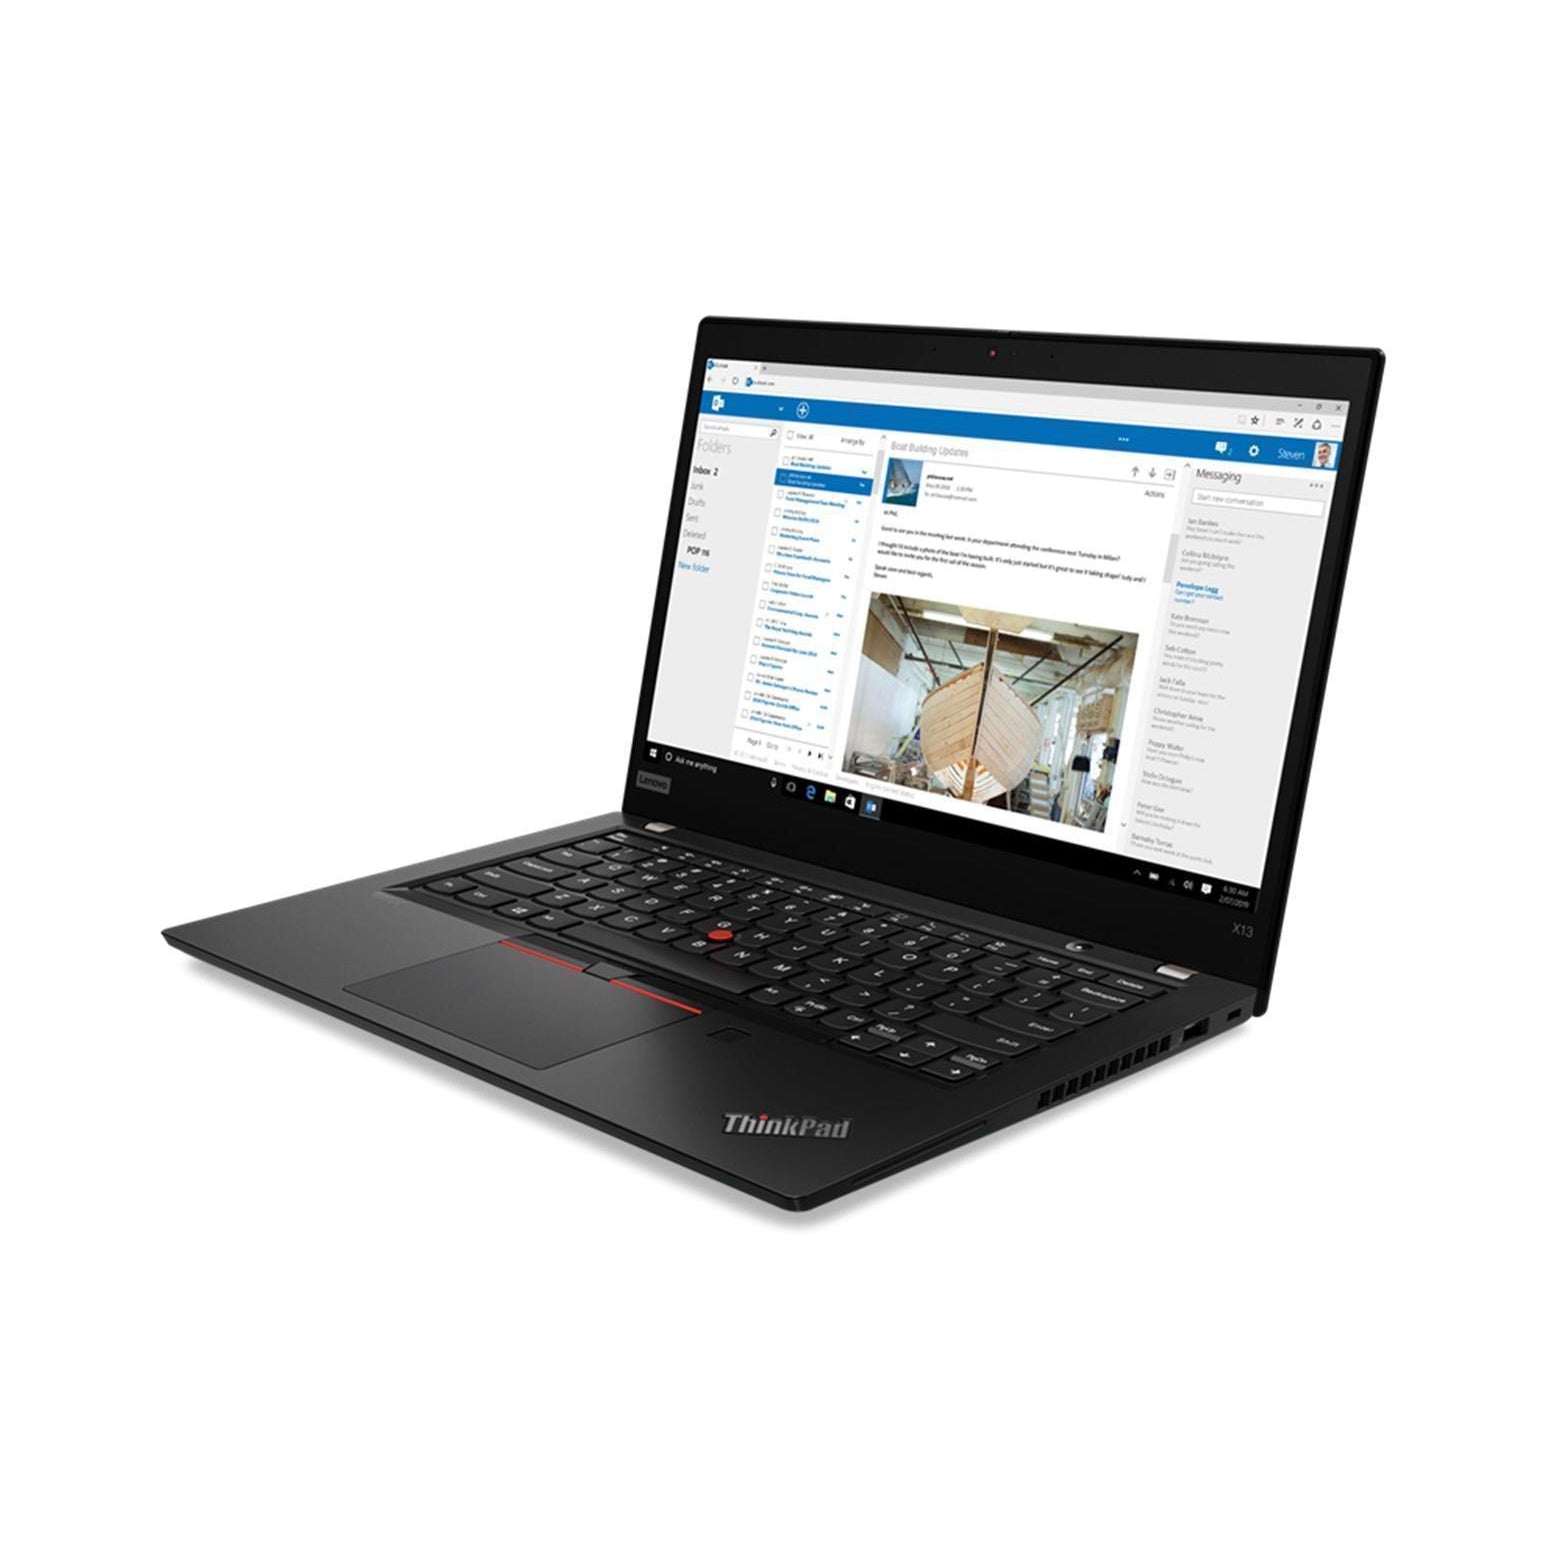 Lenovo ThinkPad 13 2nd Gen Intel Core i5 7th Generation 8GB RAM 128GB SSD 13.3" - Black - Refurbished Good